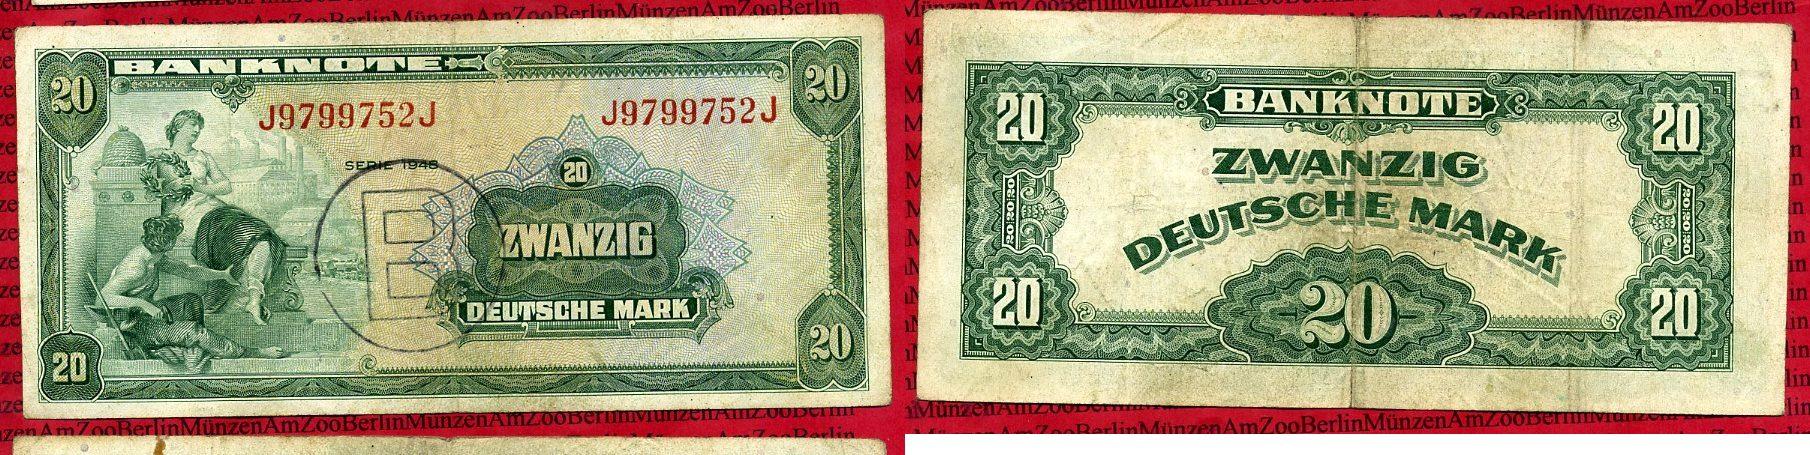 Foto Bundesrepublik Deutschland berlin 20 Dm Deutsche Mark Kopfgeld 1948 foto 63150